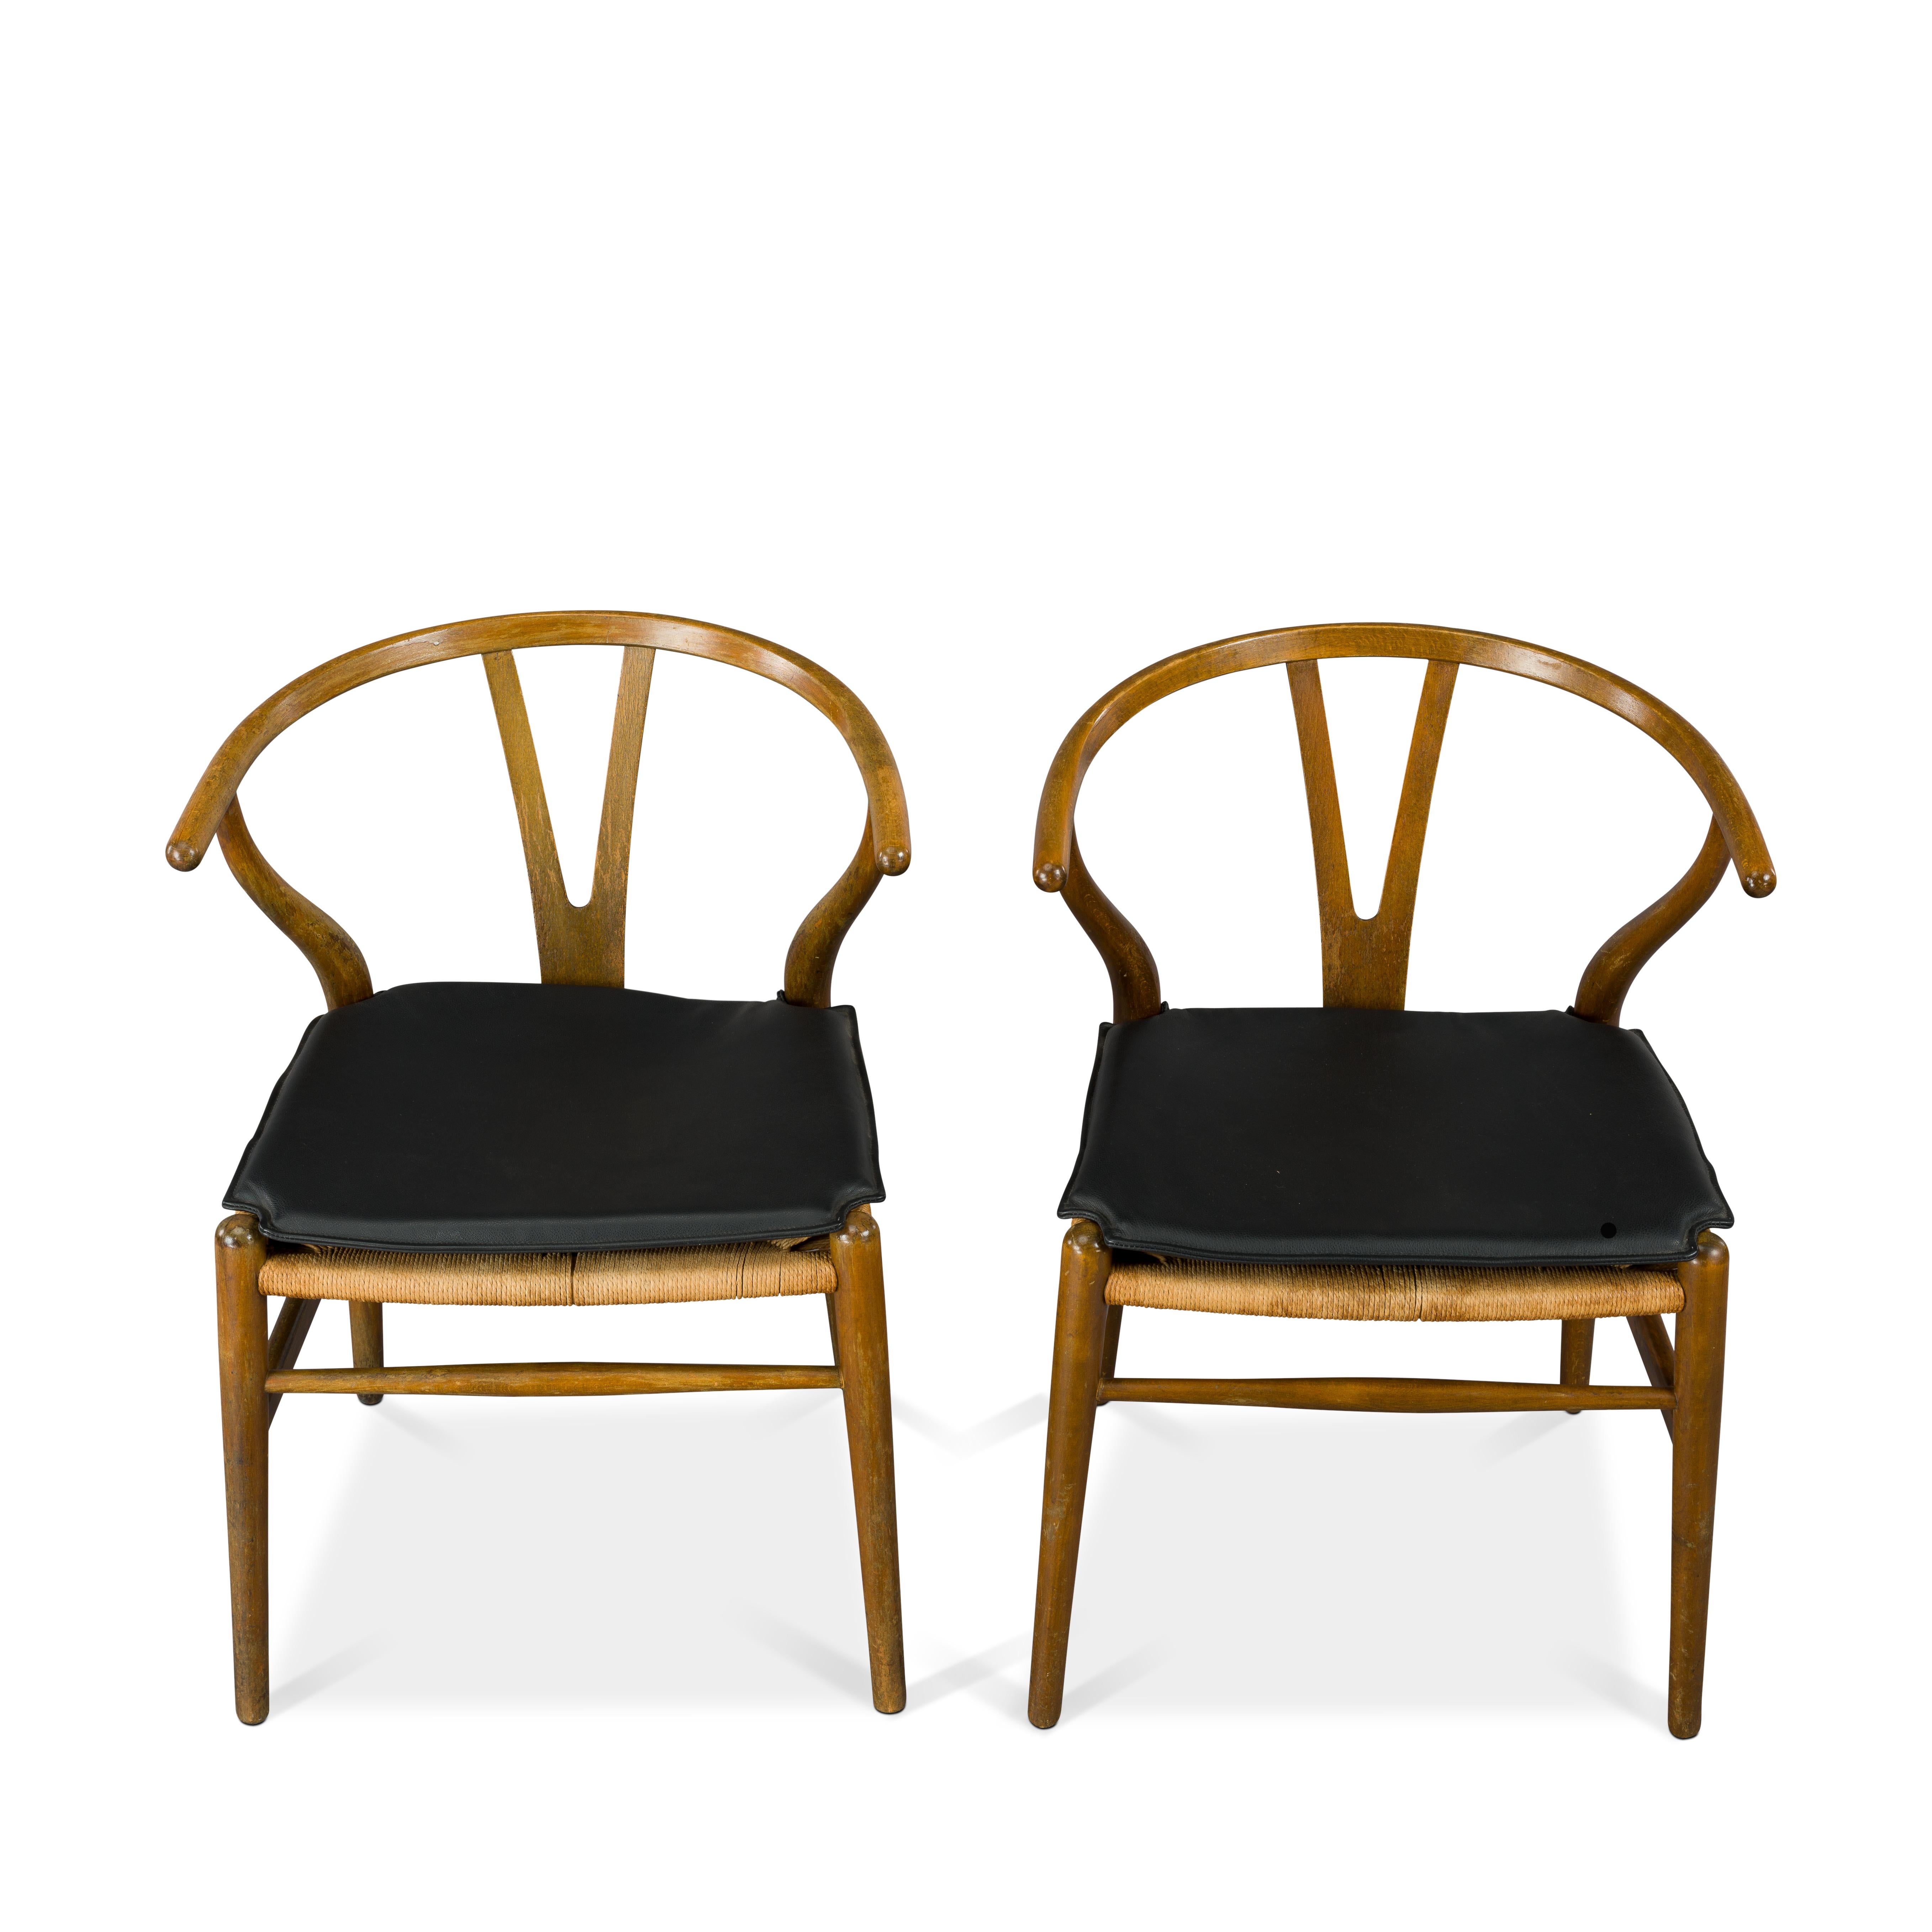 Mid-20th Century Midcentury CH24 Wishbone Chairs by Hans J. Wegner for Carl Hansen & Søn Made in